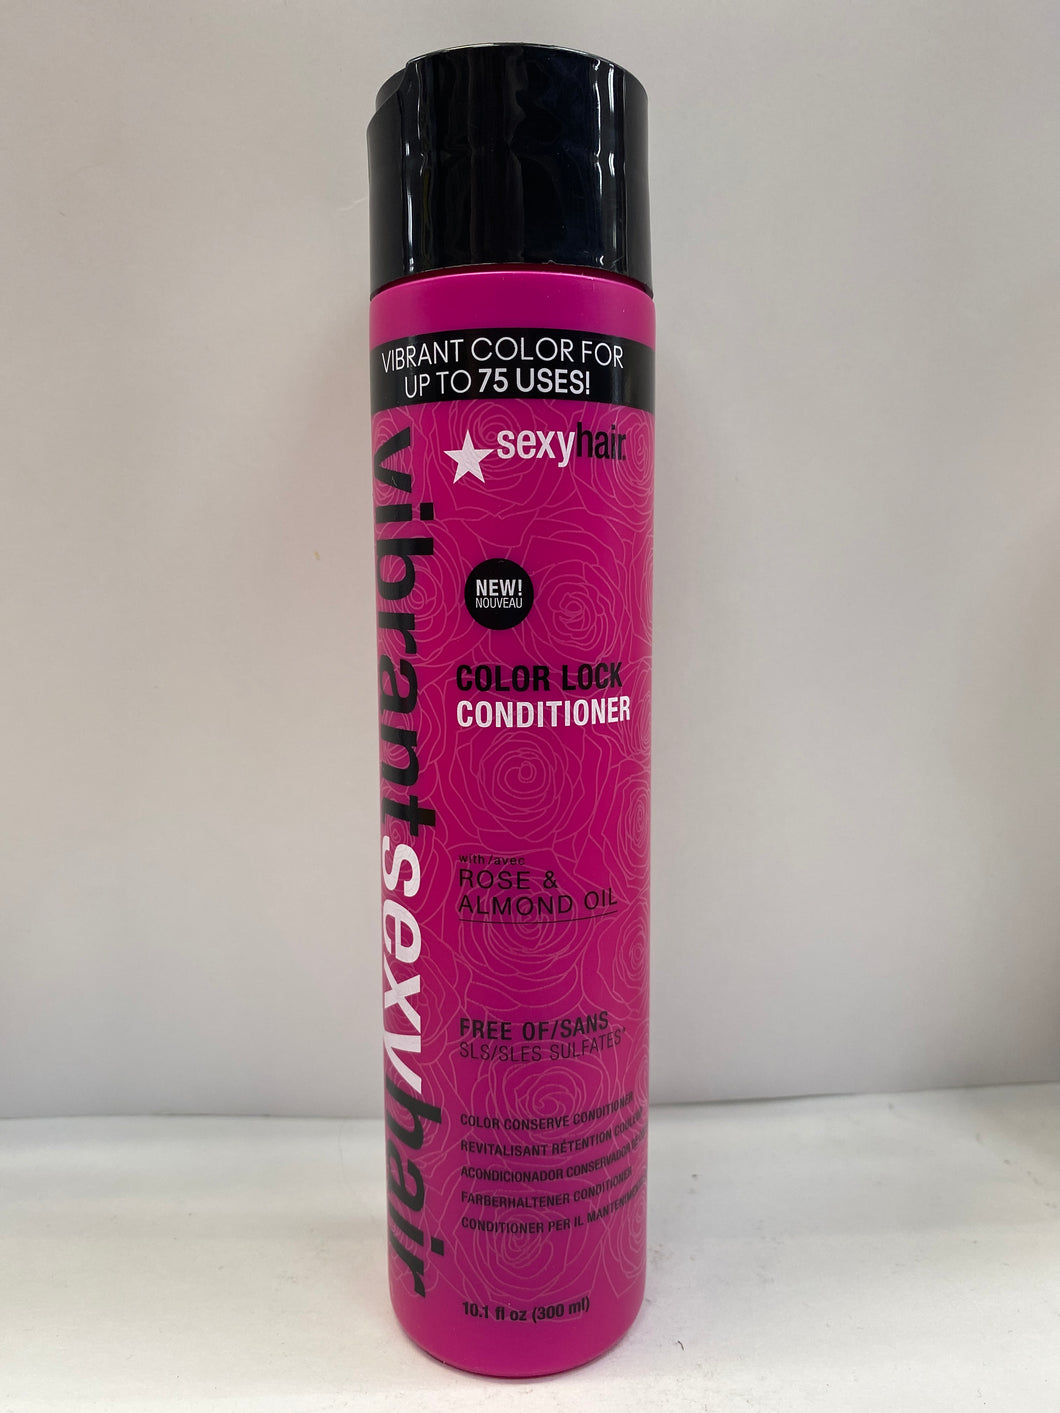 Vibrant Sexy Hair Color Lock Conditioner Color Conserve Conditioner